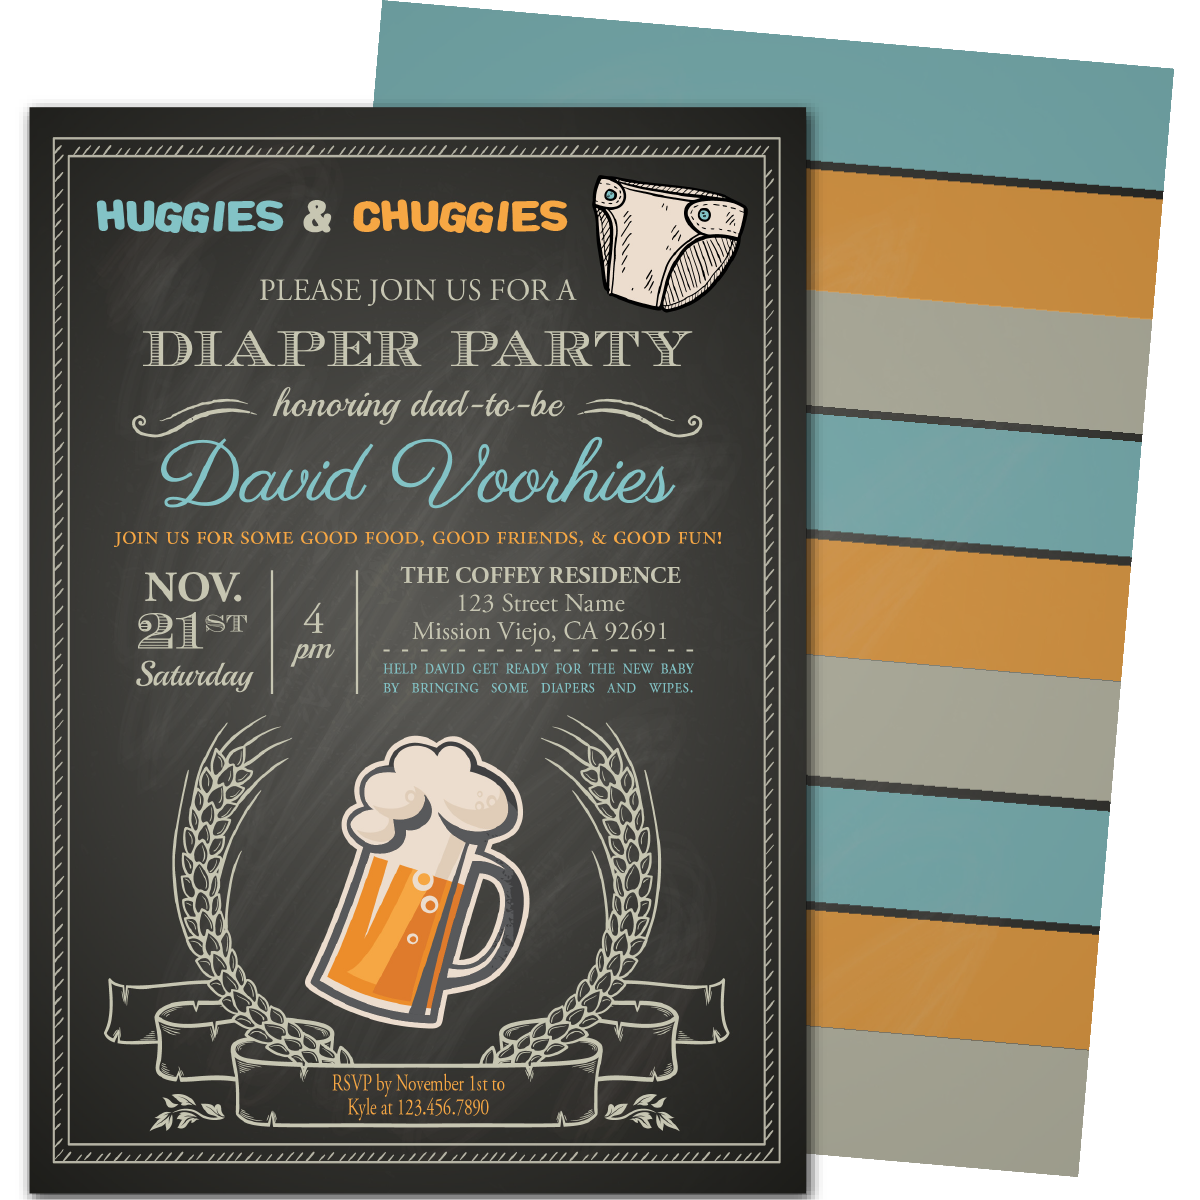 Huggies & Chuggies Diaper Party Invitations